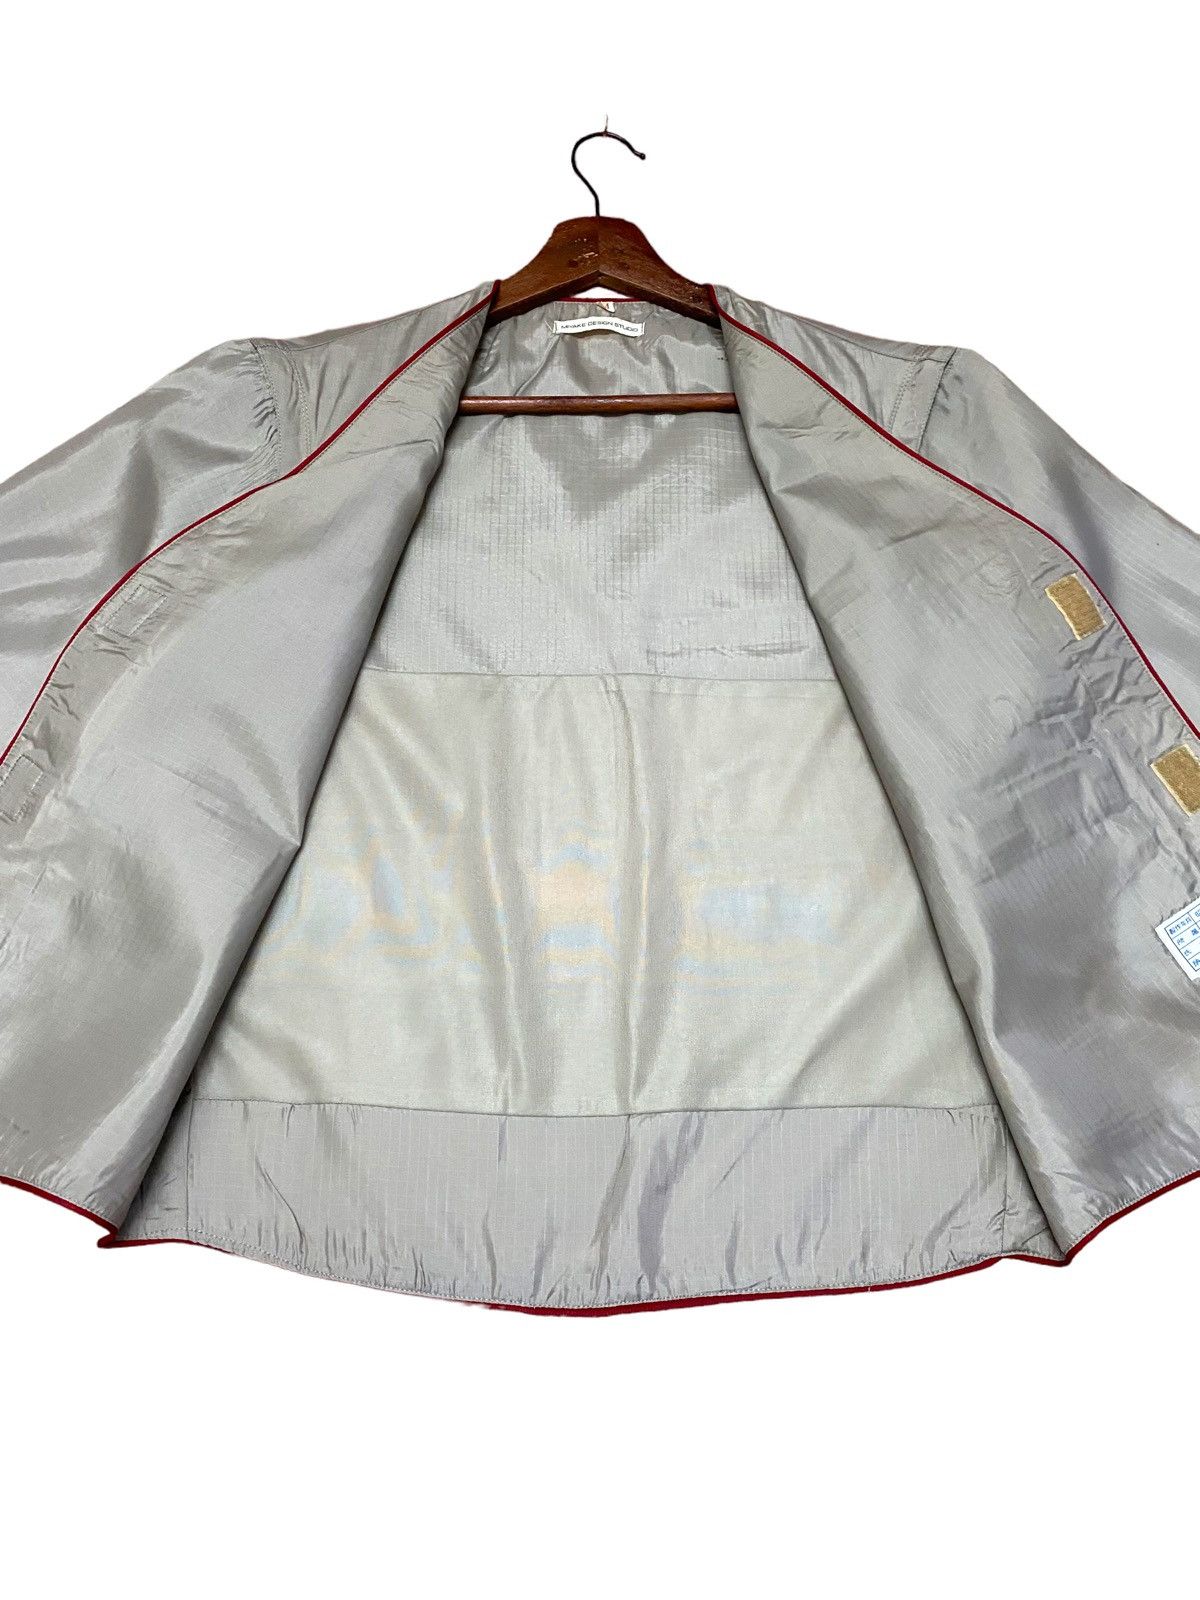 Issey Miyake Final Drop Miyake Design Studio Sony Multipocket Jacket Size US M / EU 48-50 / 2 - 6 Thumbnail